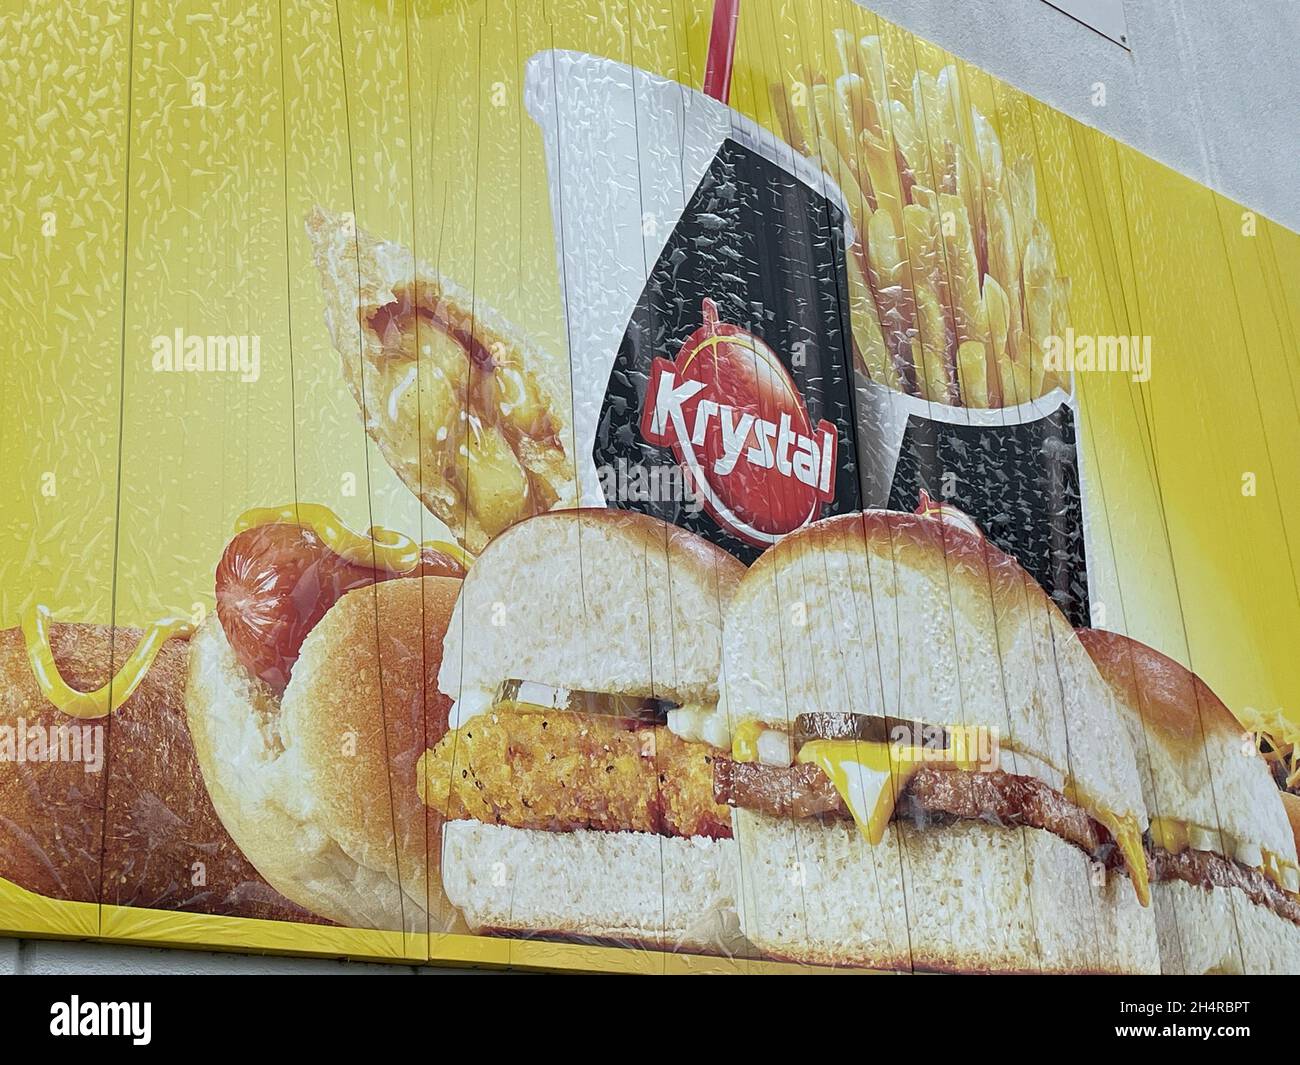 Augusta, Ga USA - 17 01 21: Krystal fast food restaurant artwork on wall of food in Stock Photo